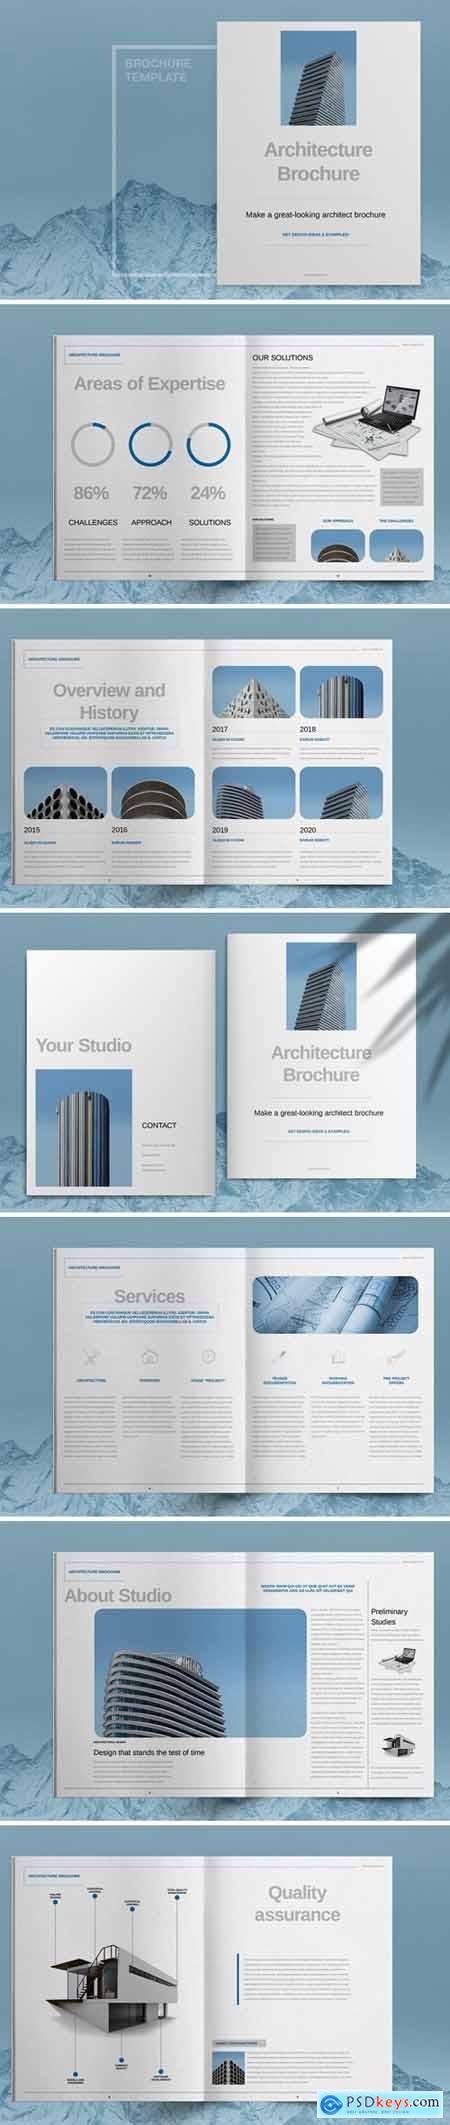 Blue Architecture Brochure Template